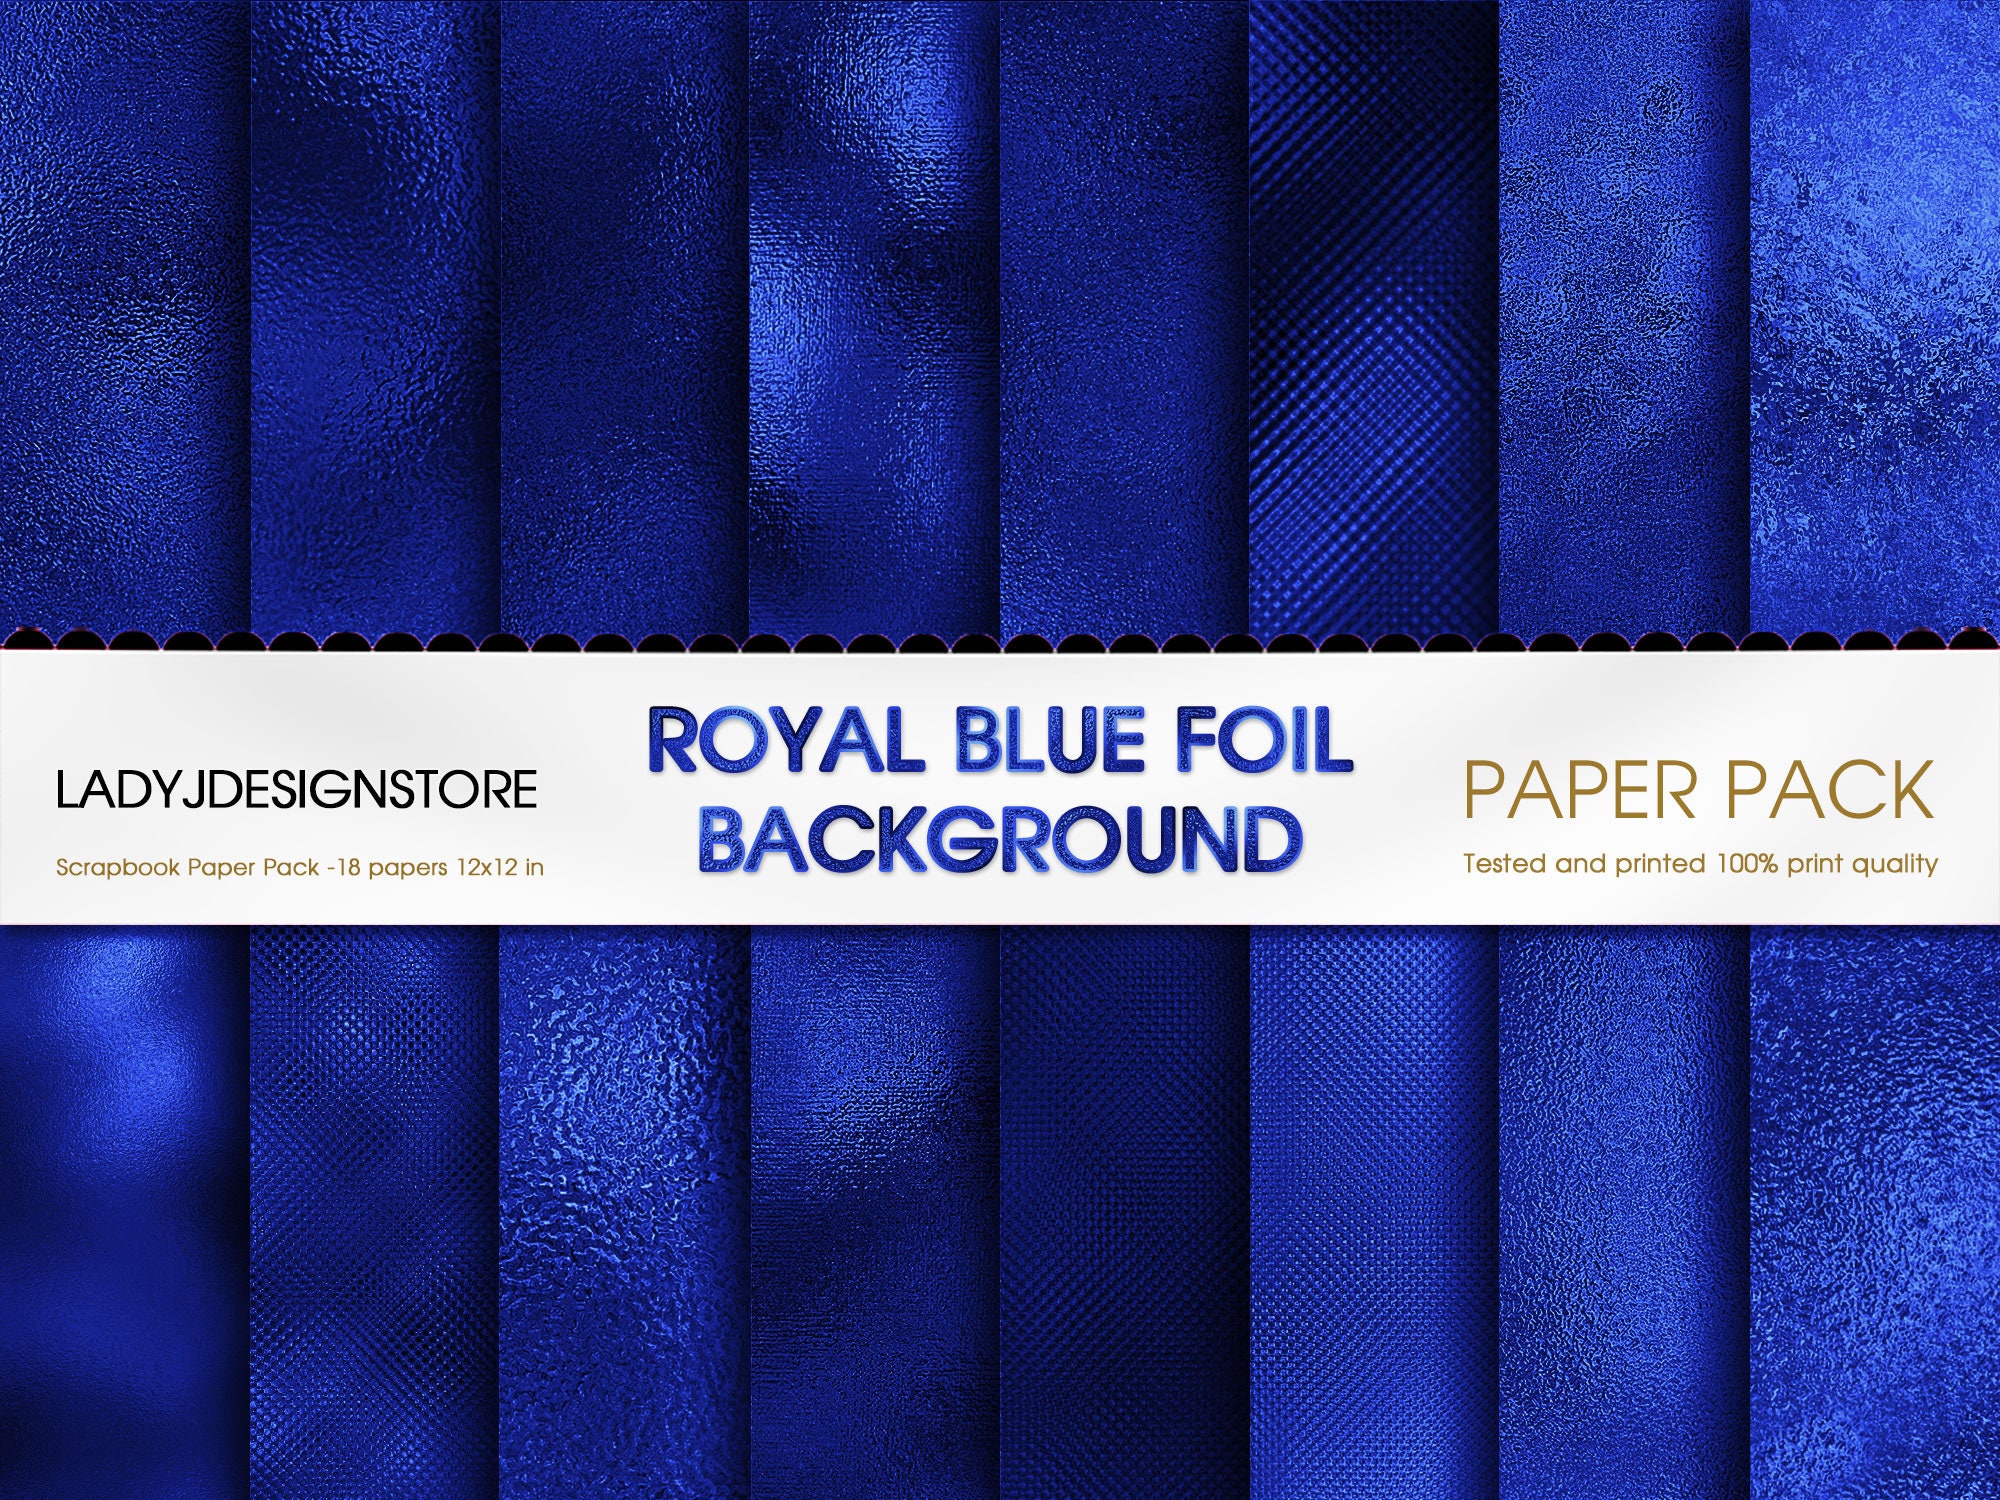 Royal Paper & Pack